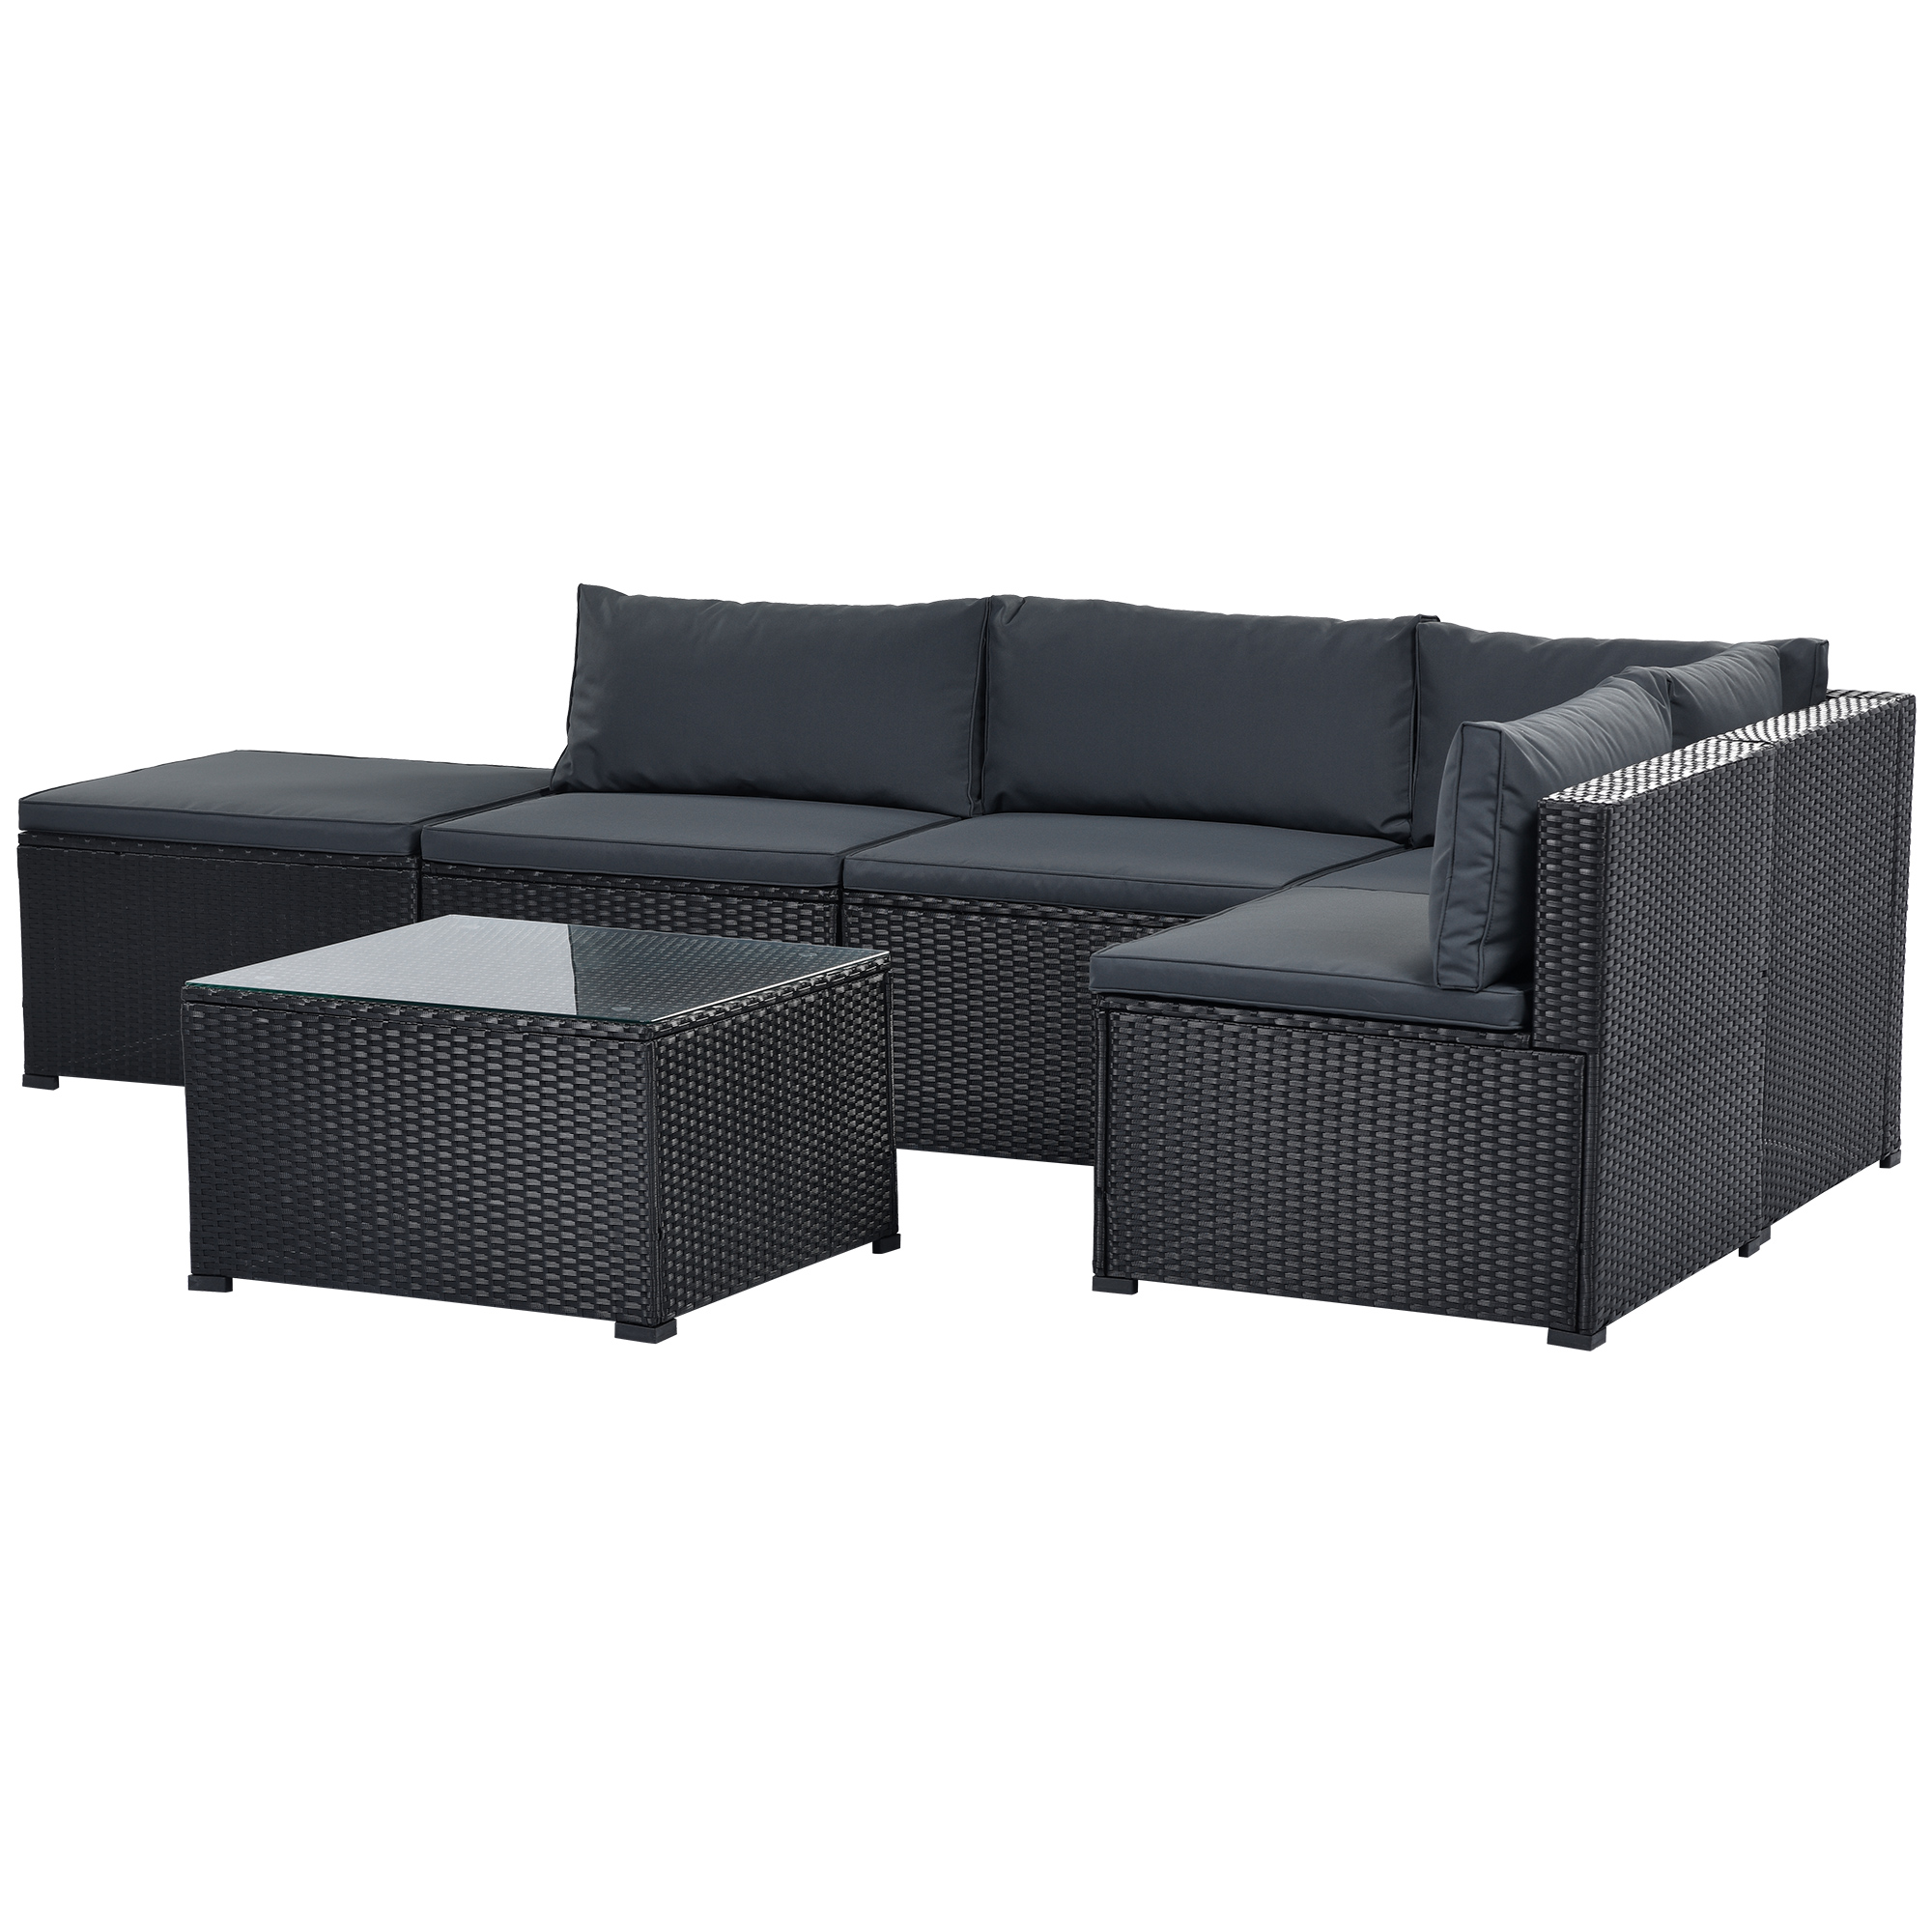 Casainc 6-Piece PE Rattan Wicker Modern Outdoor Patio Conversation Furniture Set with Gray Cushion-CASAINC